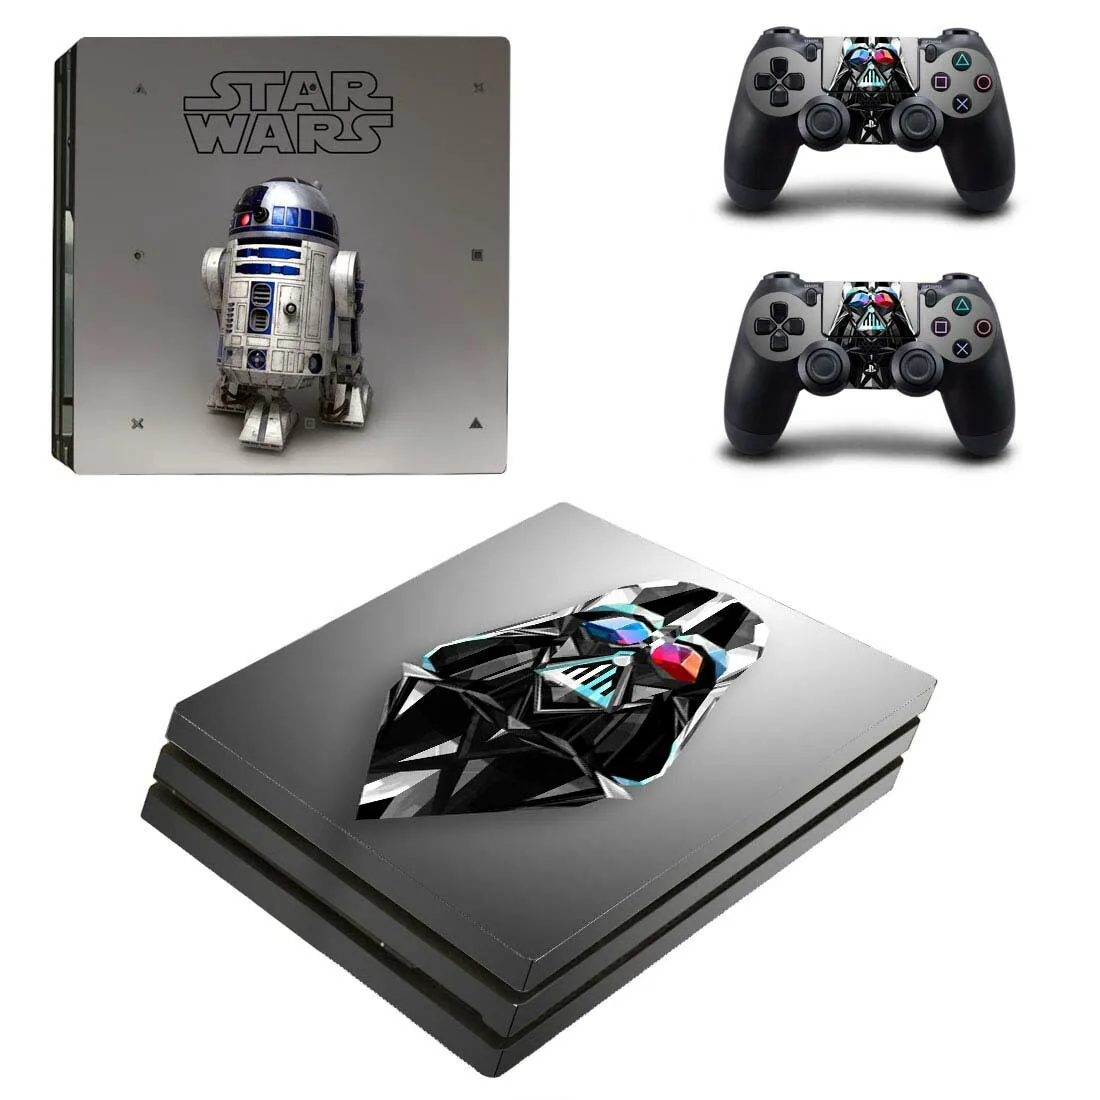 PS4 Pro sticker s Star Wars PS 4 Play station 4 Pro виниловые наклейки для playstation 4 Pro консоли и контроллера